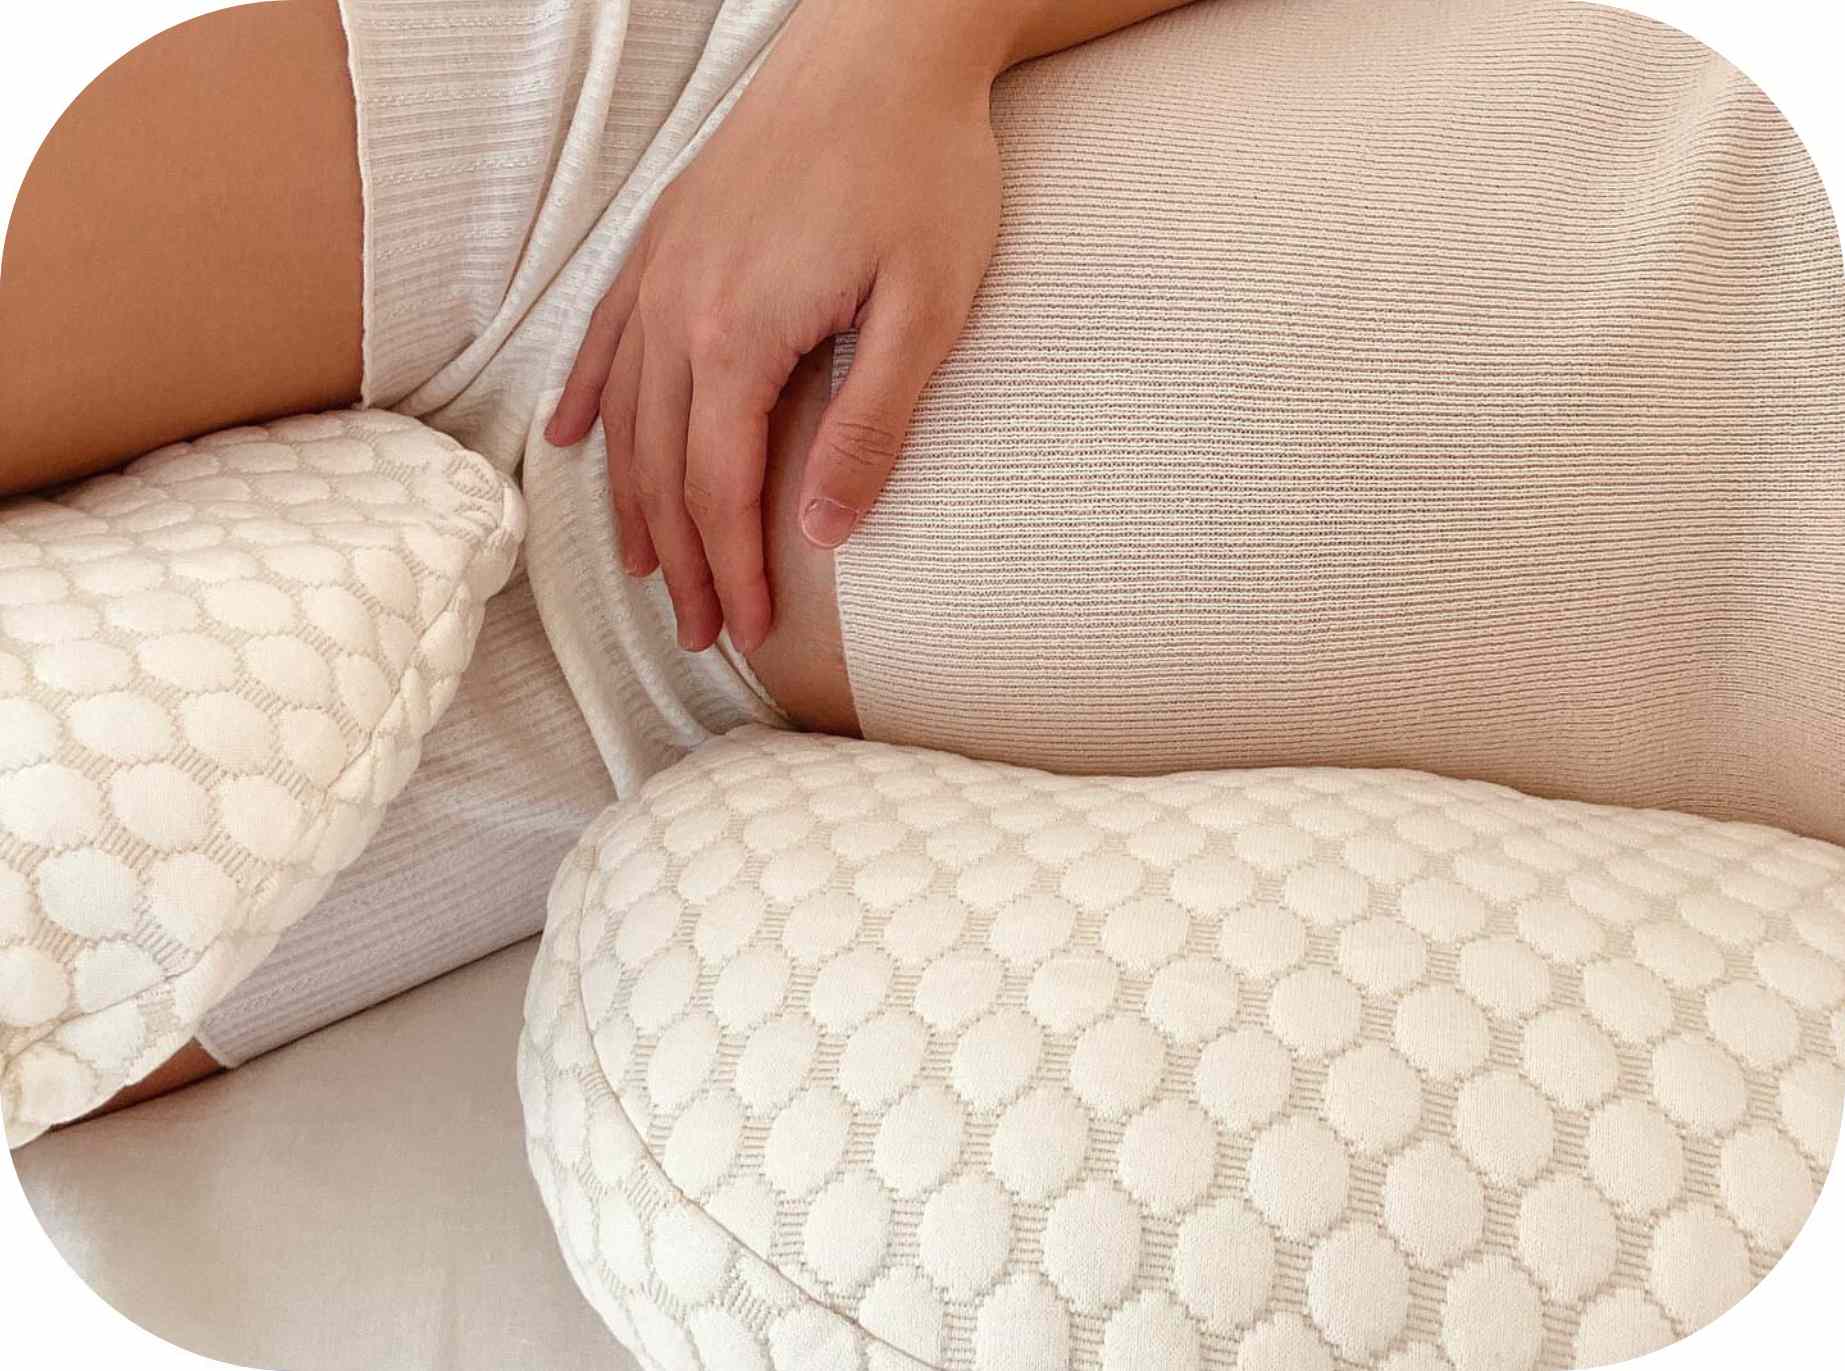 Pregnant Sleeping - Sleepybelly Pregnancy Pillow | More Restful Sleep for Mum and Bub ðŸ’¤